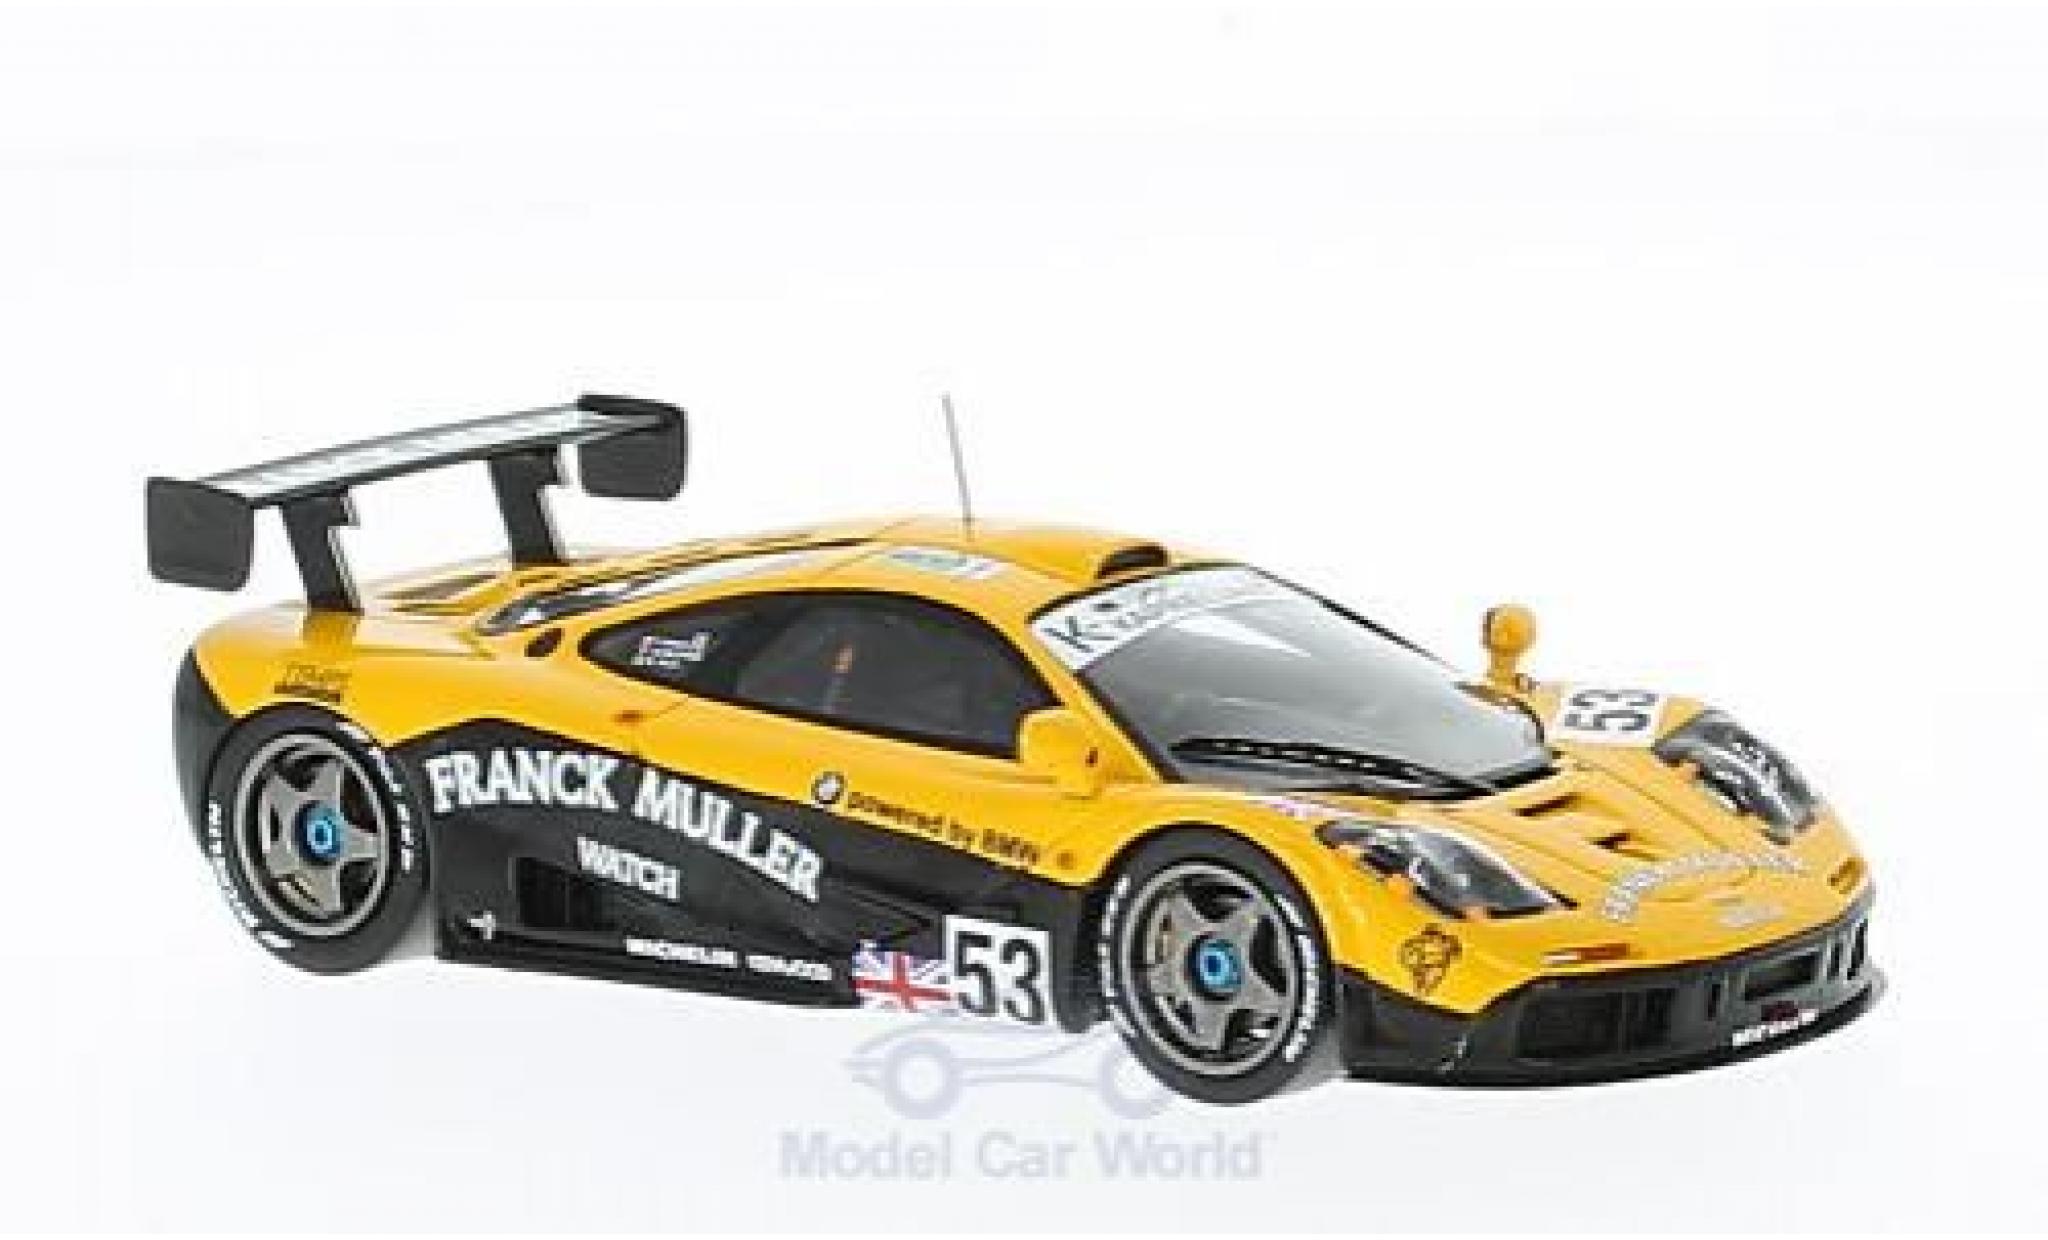 1:43 Mclaren F1 Gtr #.53 Lemans Lm 1996 Franck Muller Racing Modelo Diecast Car 